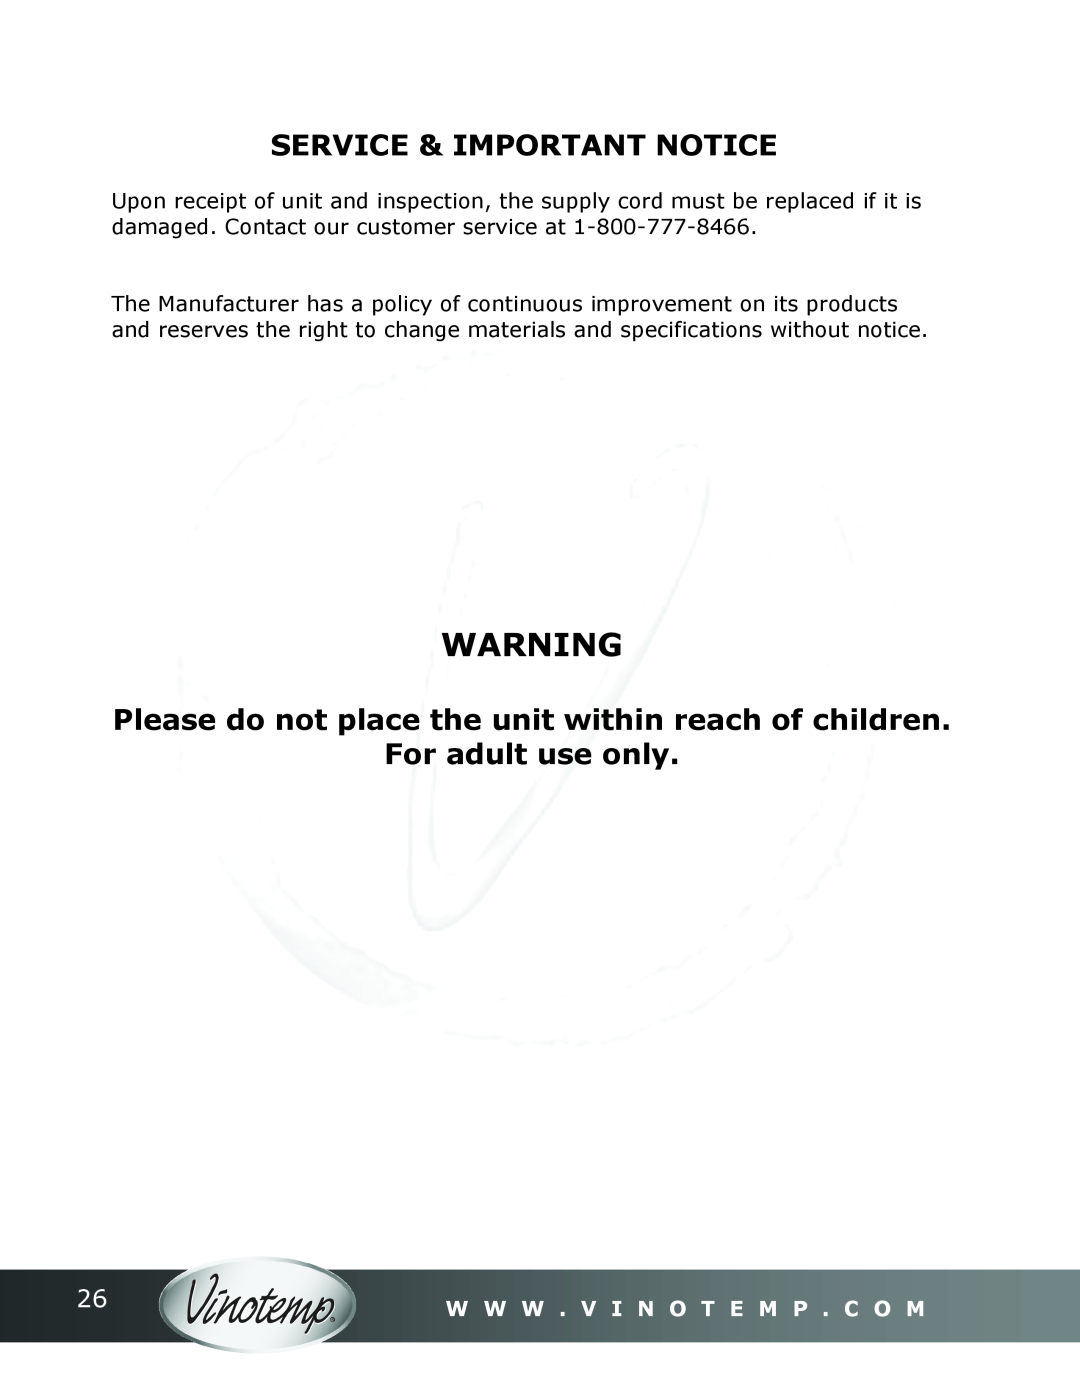 Vinotemp Portofino owner manual Service & Important Notice, For adult use only, W W W . V I N O T E M P . C O M 